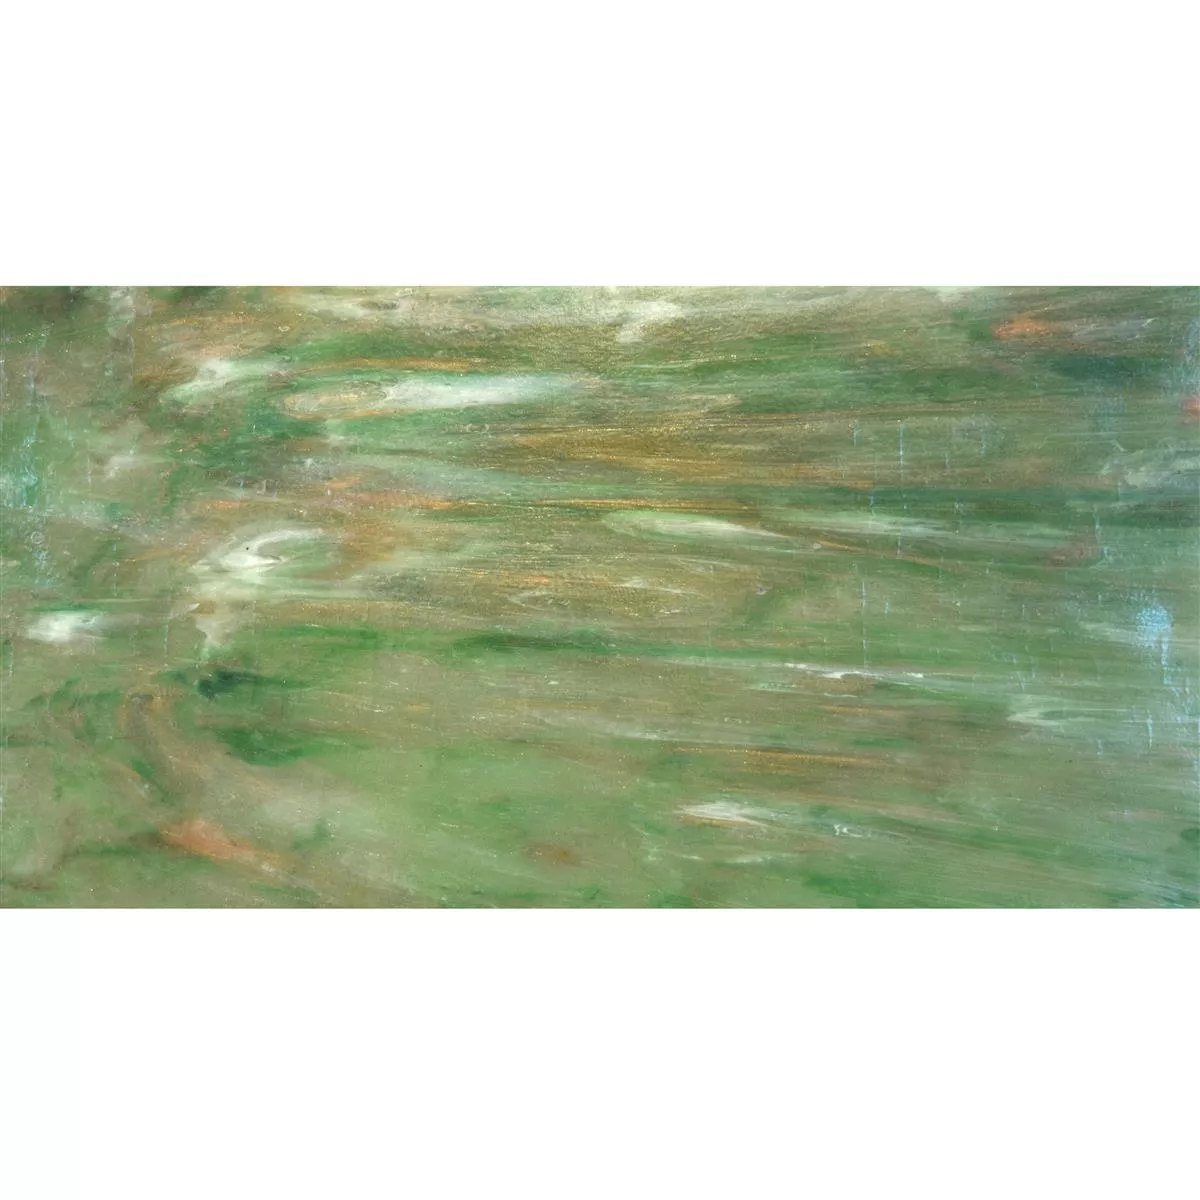 Staklo Zidne Pločice Trend-Vi Supreme Smaragd Green 30x60cm